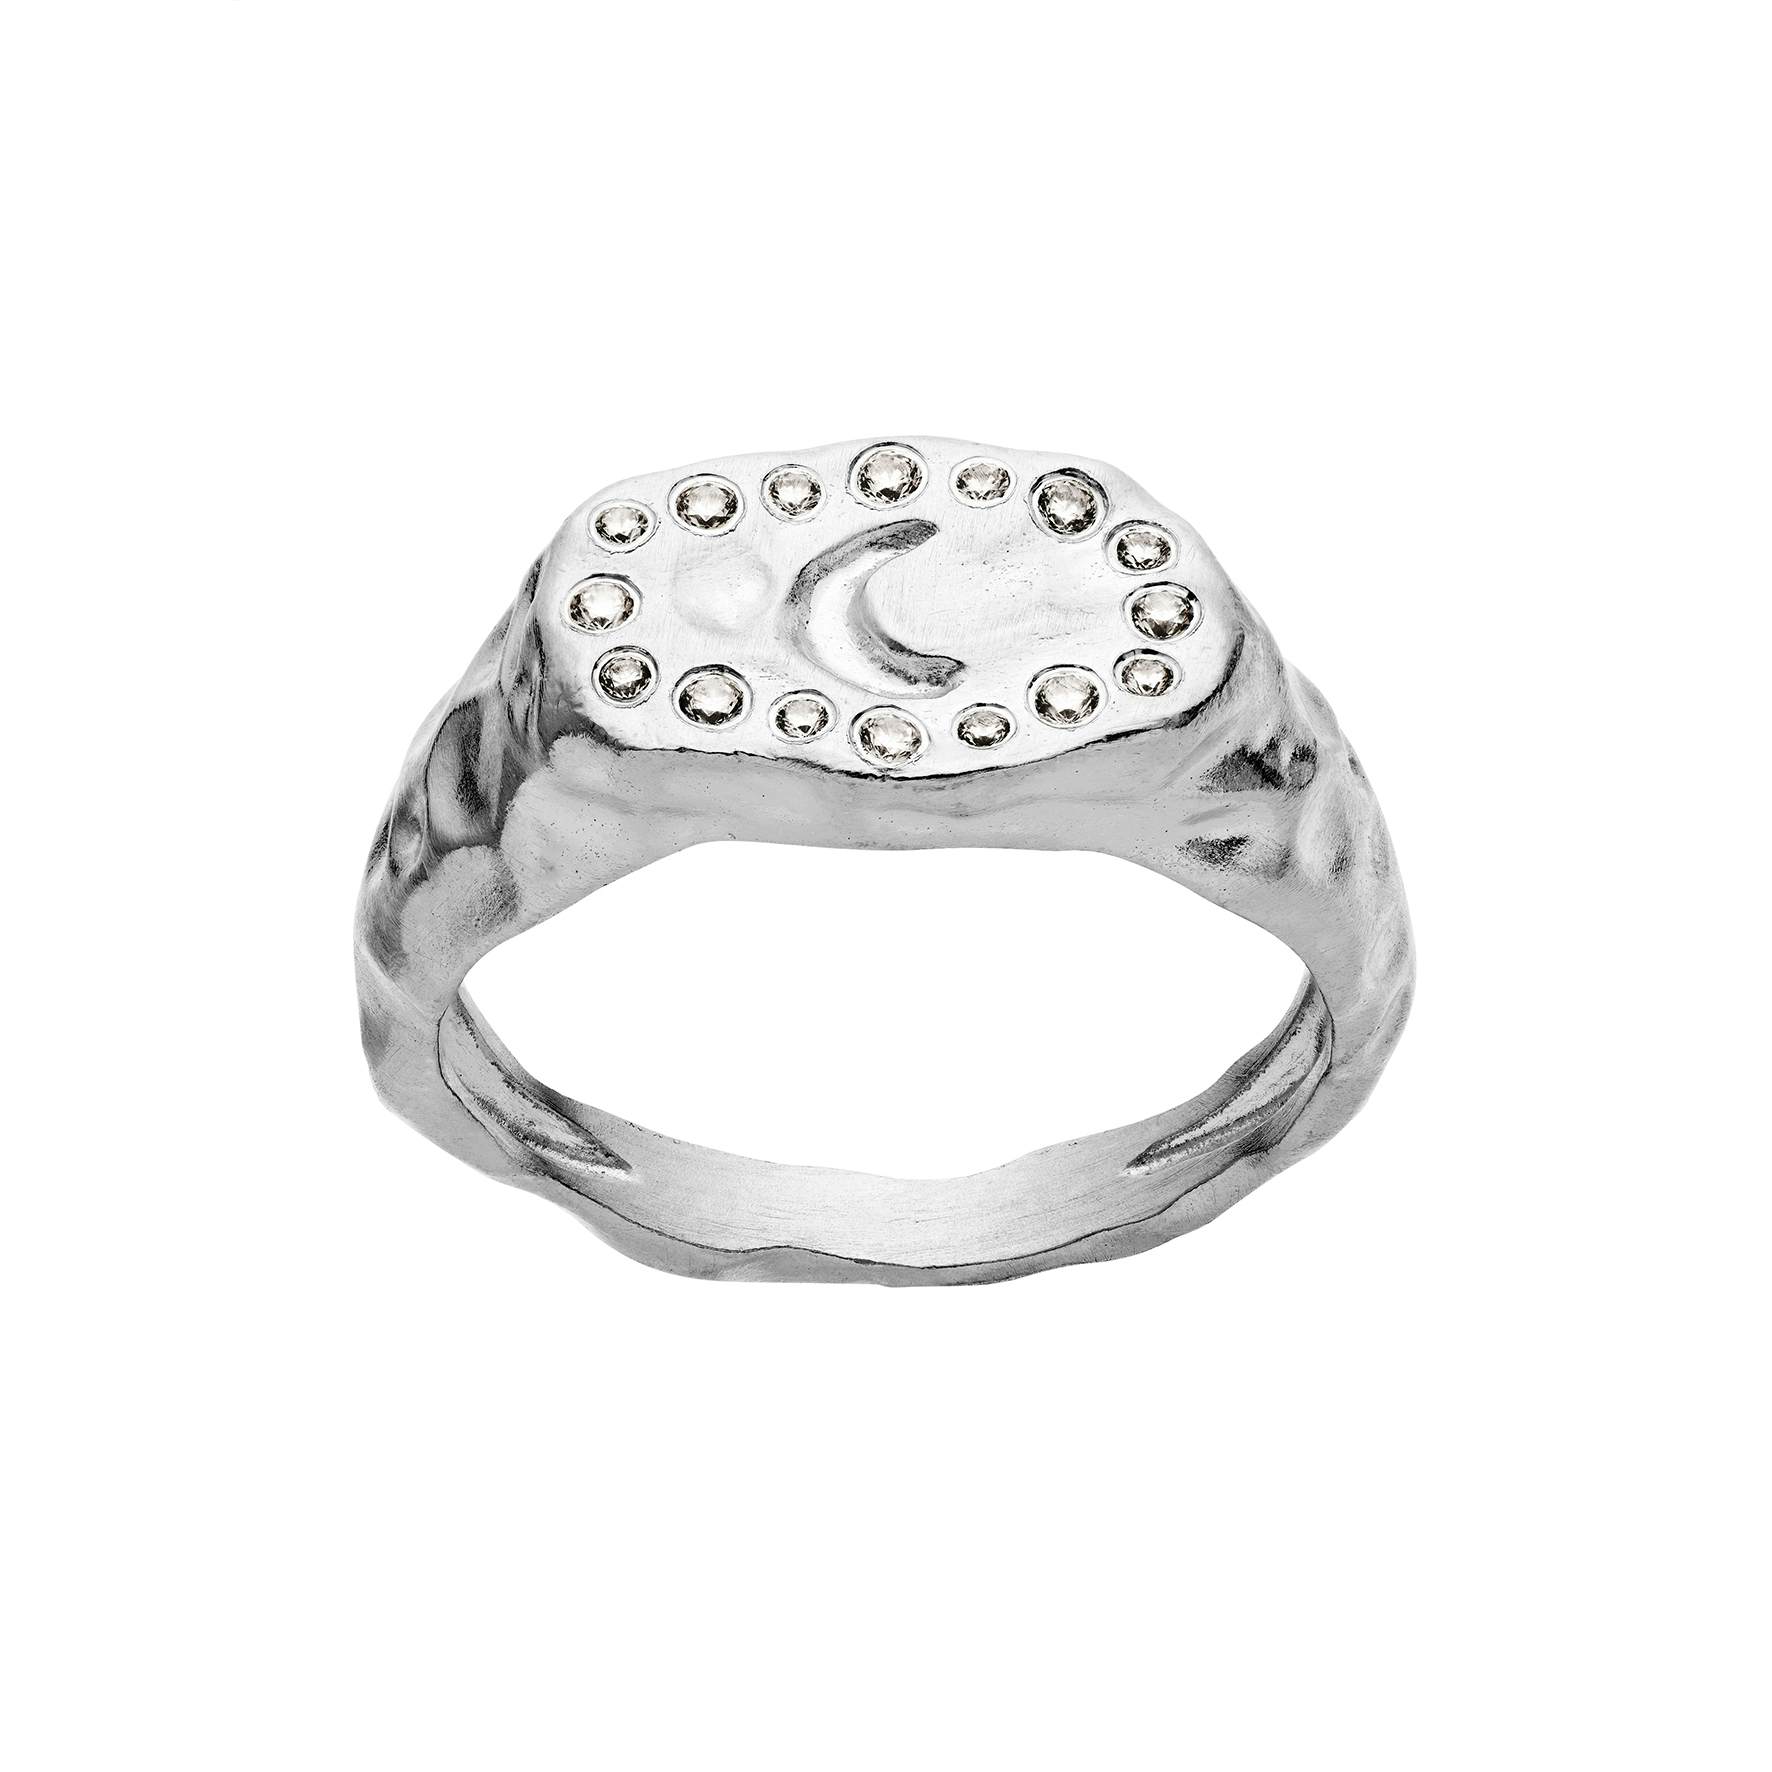 Demi Ring from Maanesten in Silver Sterling 925